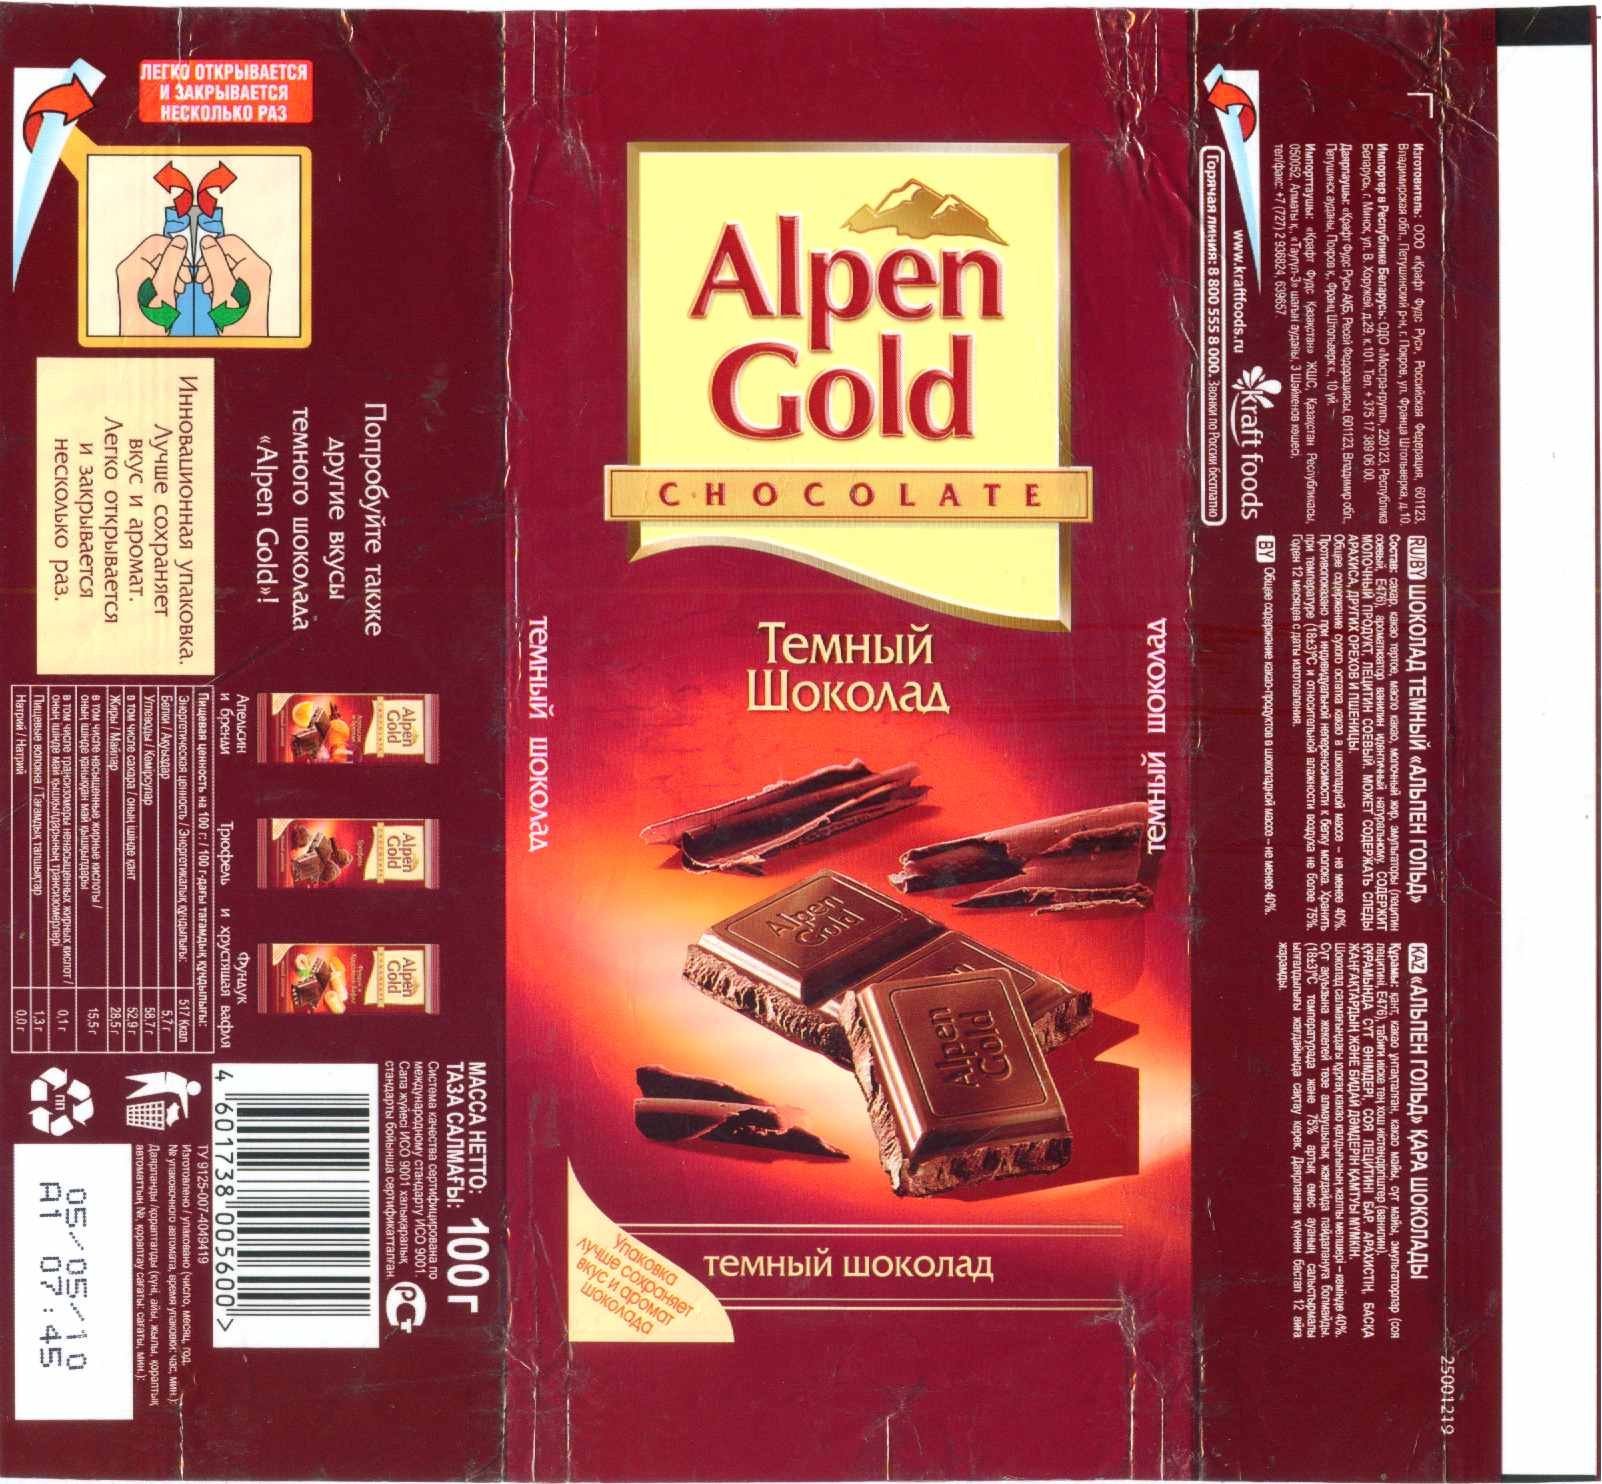 Обертка шоколада размеры. Вкусы шоколада Альпен Гольд. Состав шоколада Альпен Гольд. Шоколад Альпен Гольд темный шоколад. Альпен Гольд темный шоколад состав.